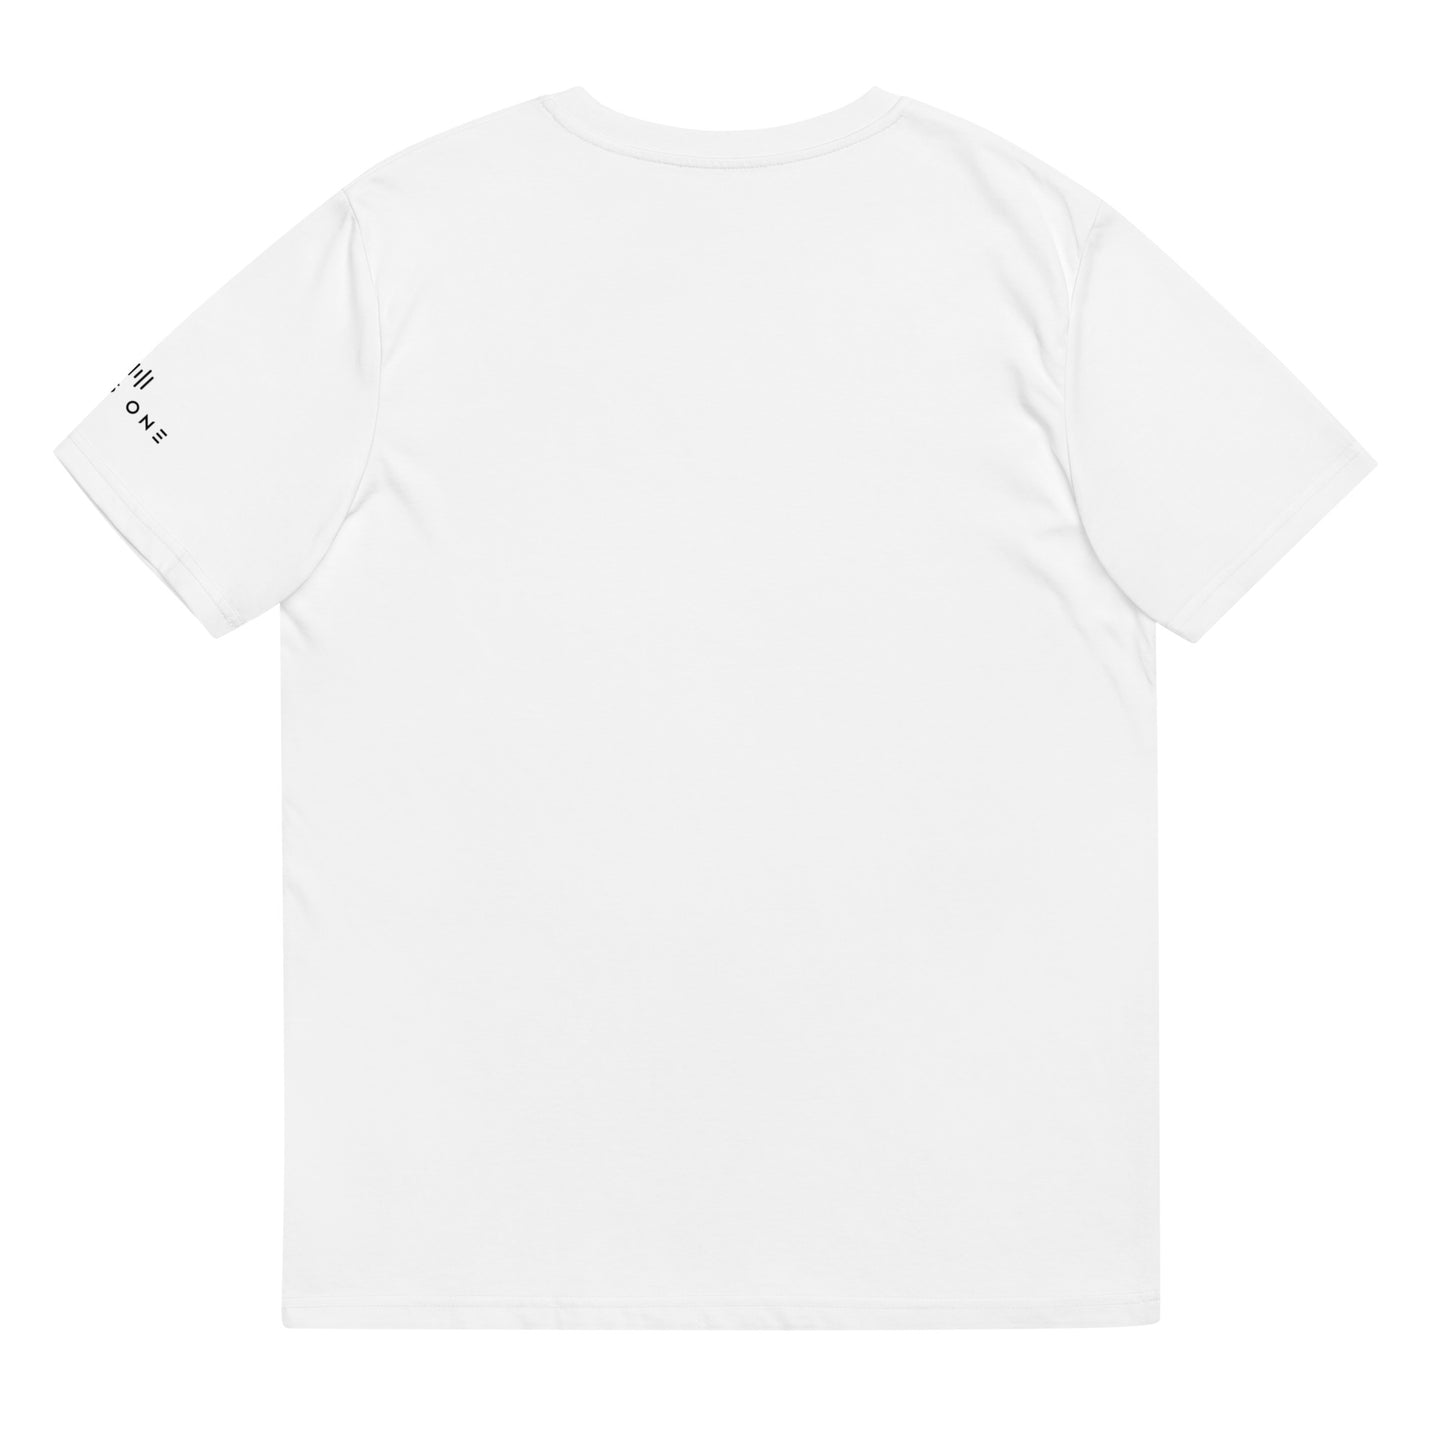 Ltd (DOn't quIT v1) Unisex organic cotton t-shirt (Black Text)